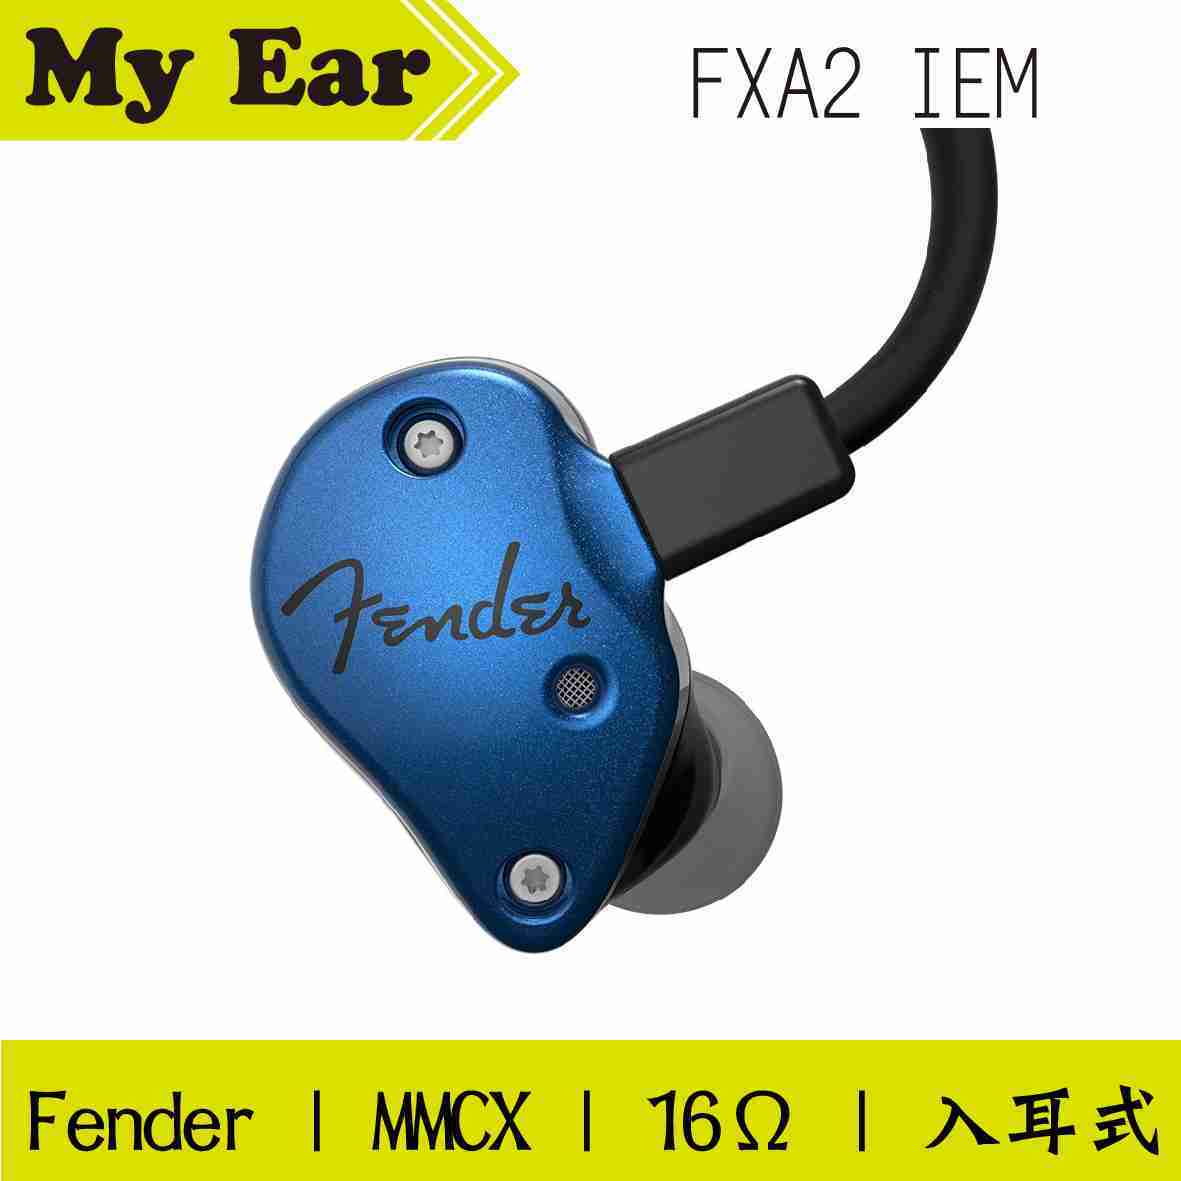 Fender FXA2 IEM 入耳式 監聽級 耳機 16Ω 藍色 | My Ear耳機專門店